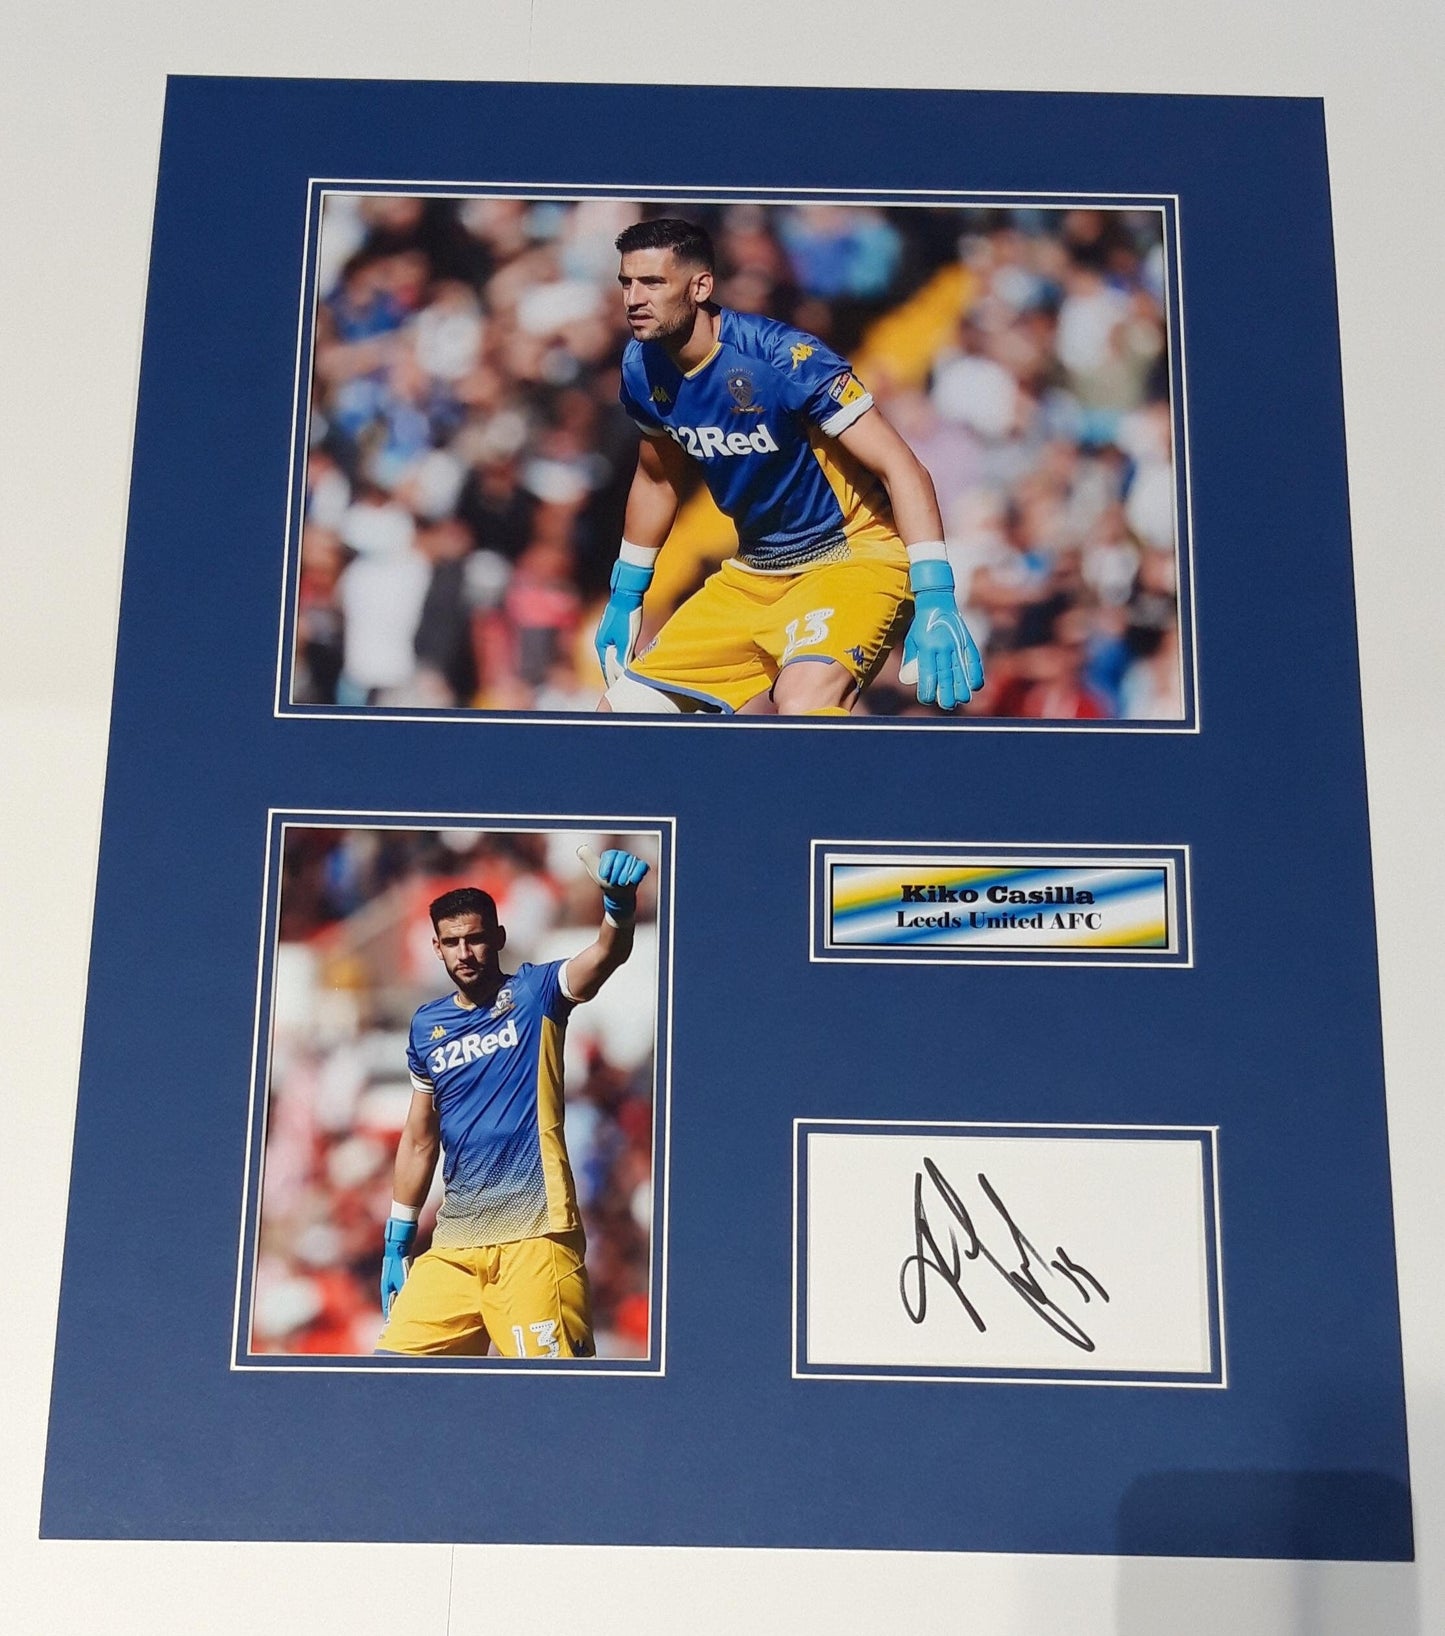 Kiko Casilla - Leeds United AFC - 20x16in signed photo montage - Leeds United memorabilia, gift, display